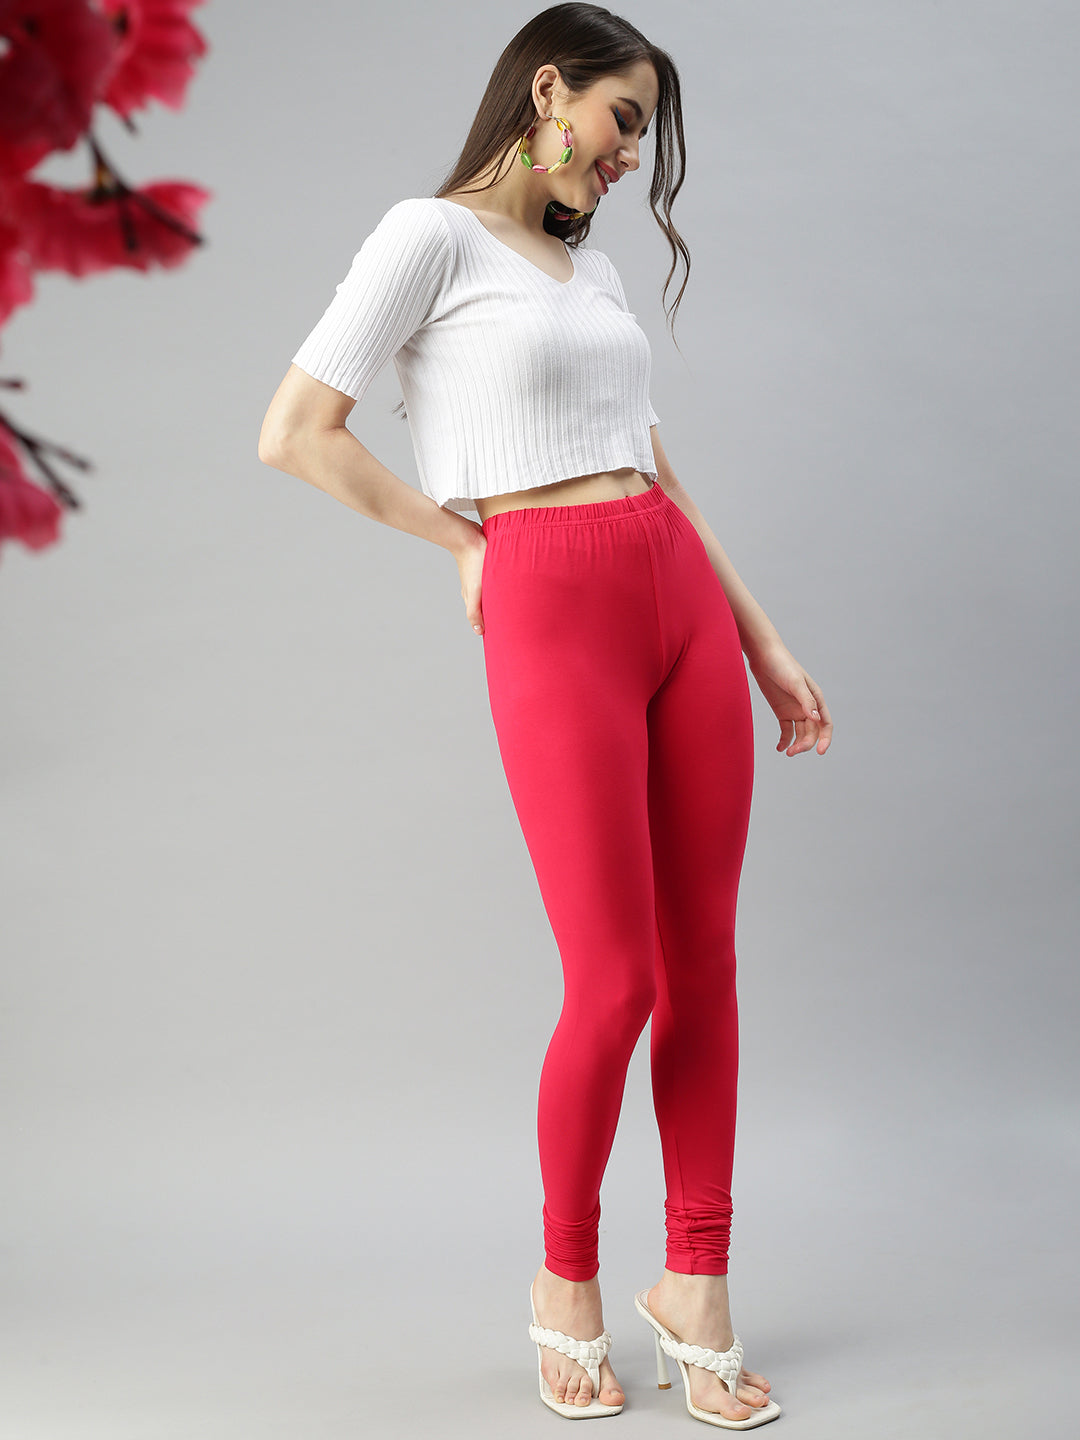 Prisma Crimson Red Churidar Leggings - Perfect Fit Guaranteed